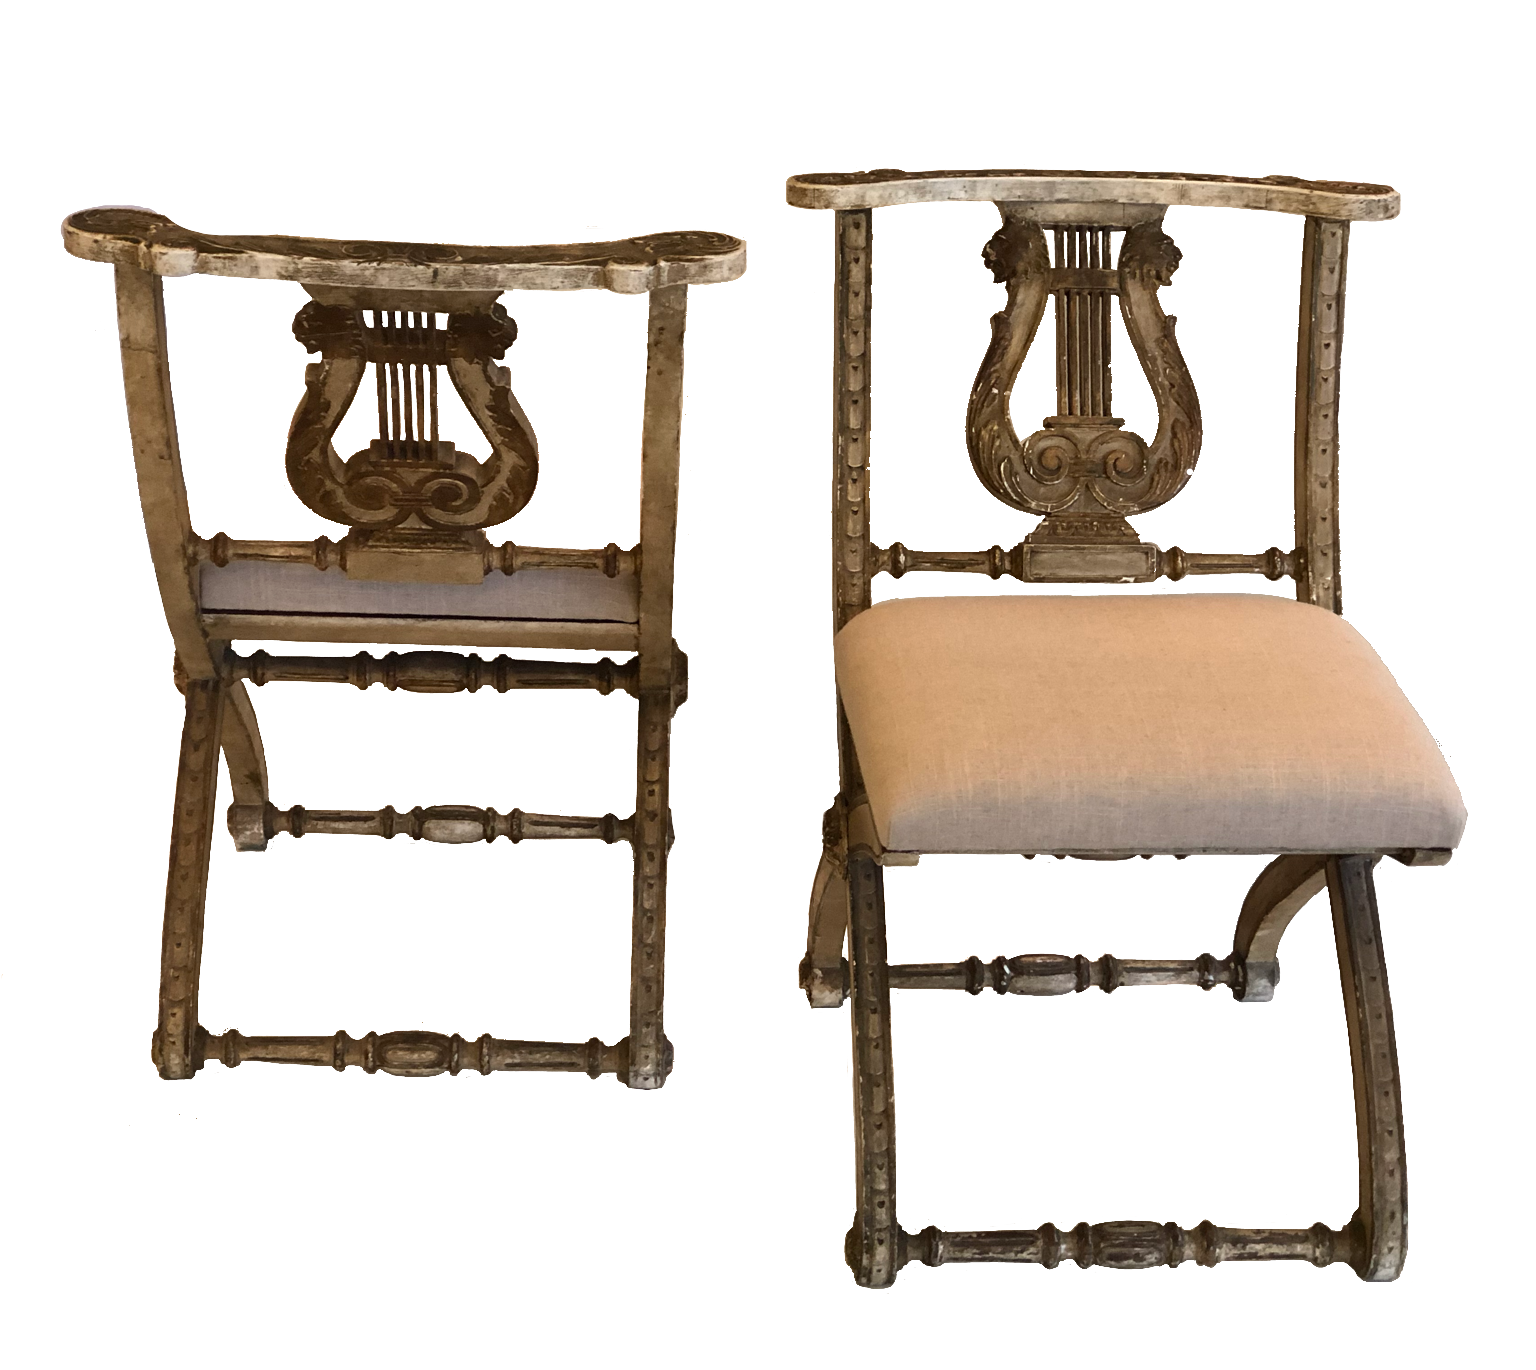 Vintage  Venetian  Seating  Lyre  Furniture  Chairish  Antique